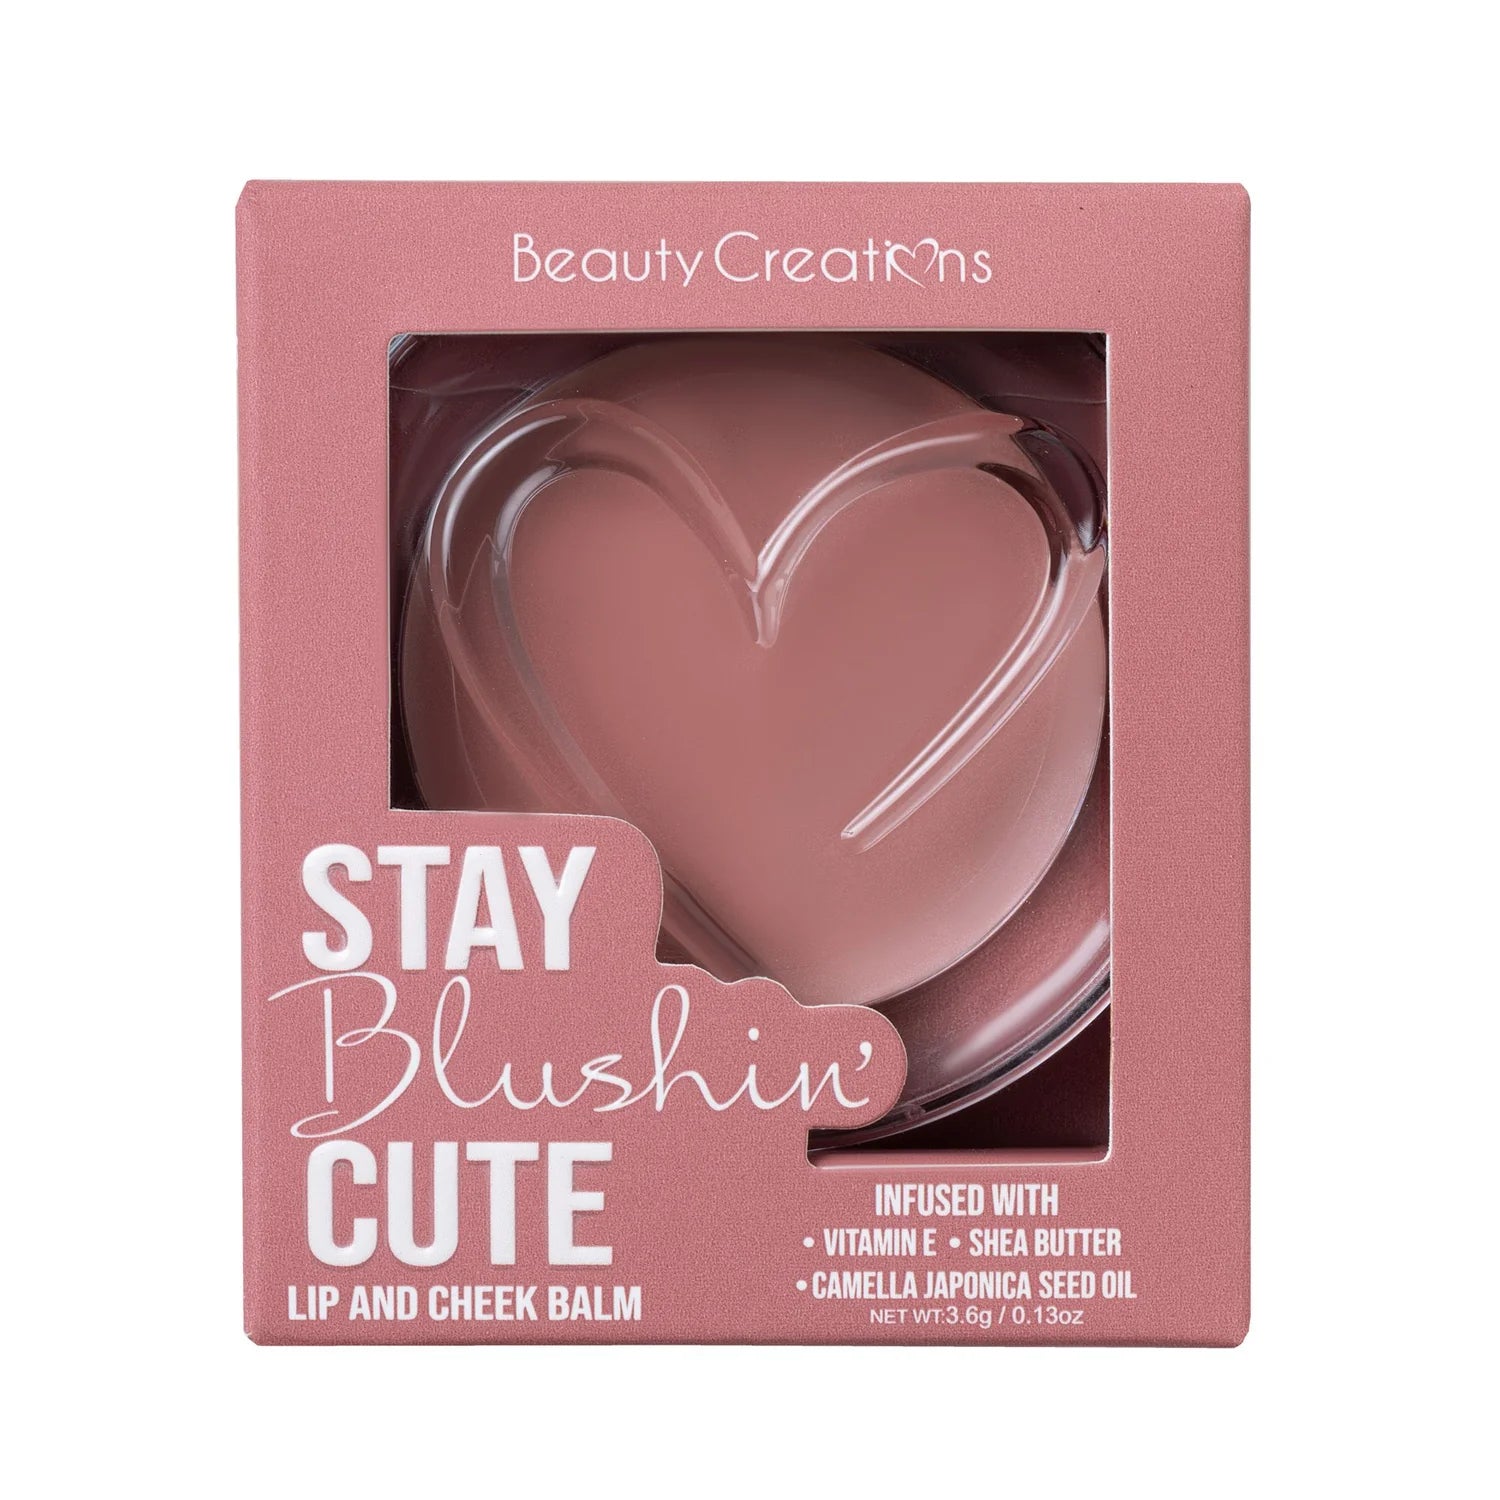 Beauty Creations - Stay Blushing Cute Lip And Cheek Balm - Born To Make It